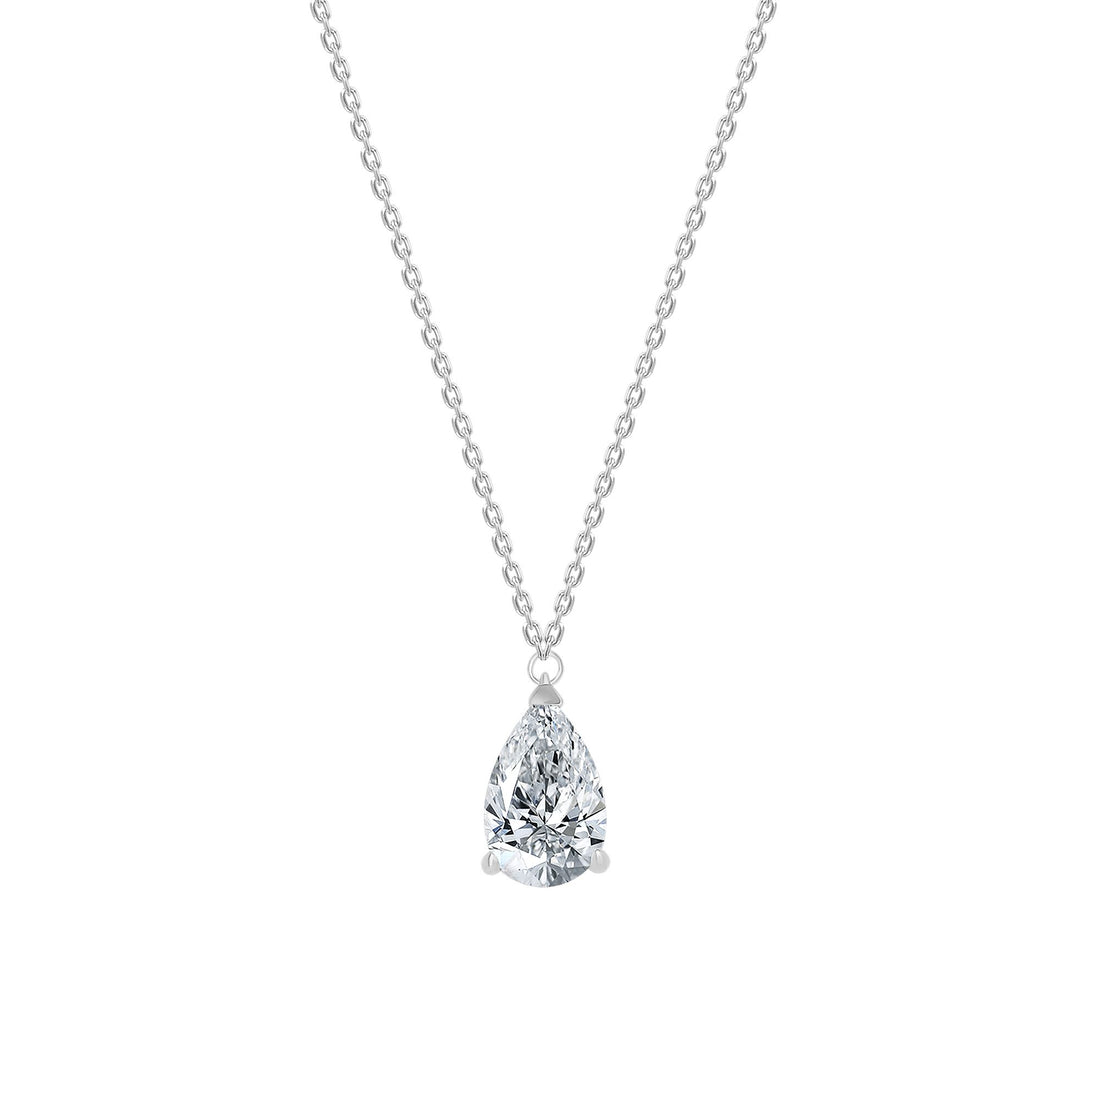 925 Sterling Silver Pear Cut CZ Pendant Necklace